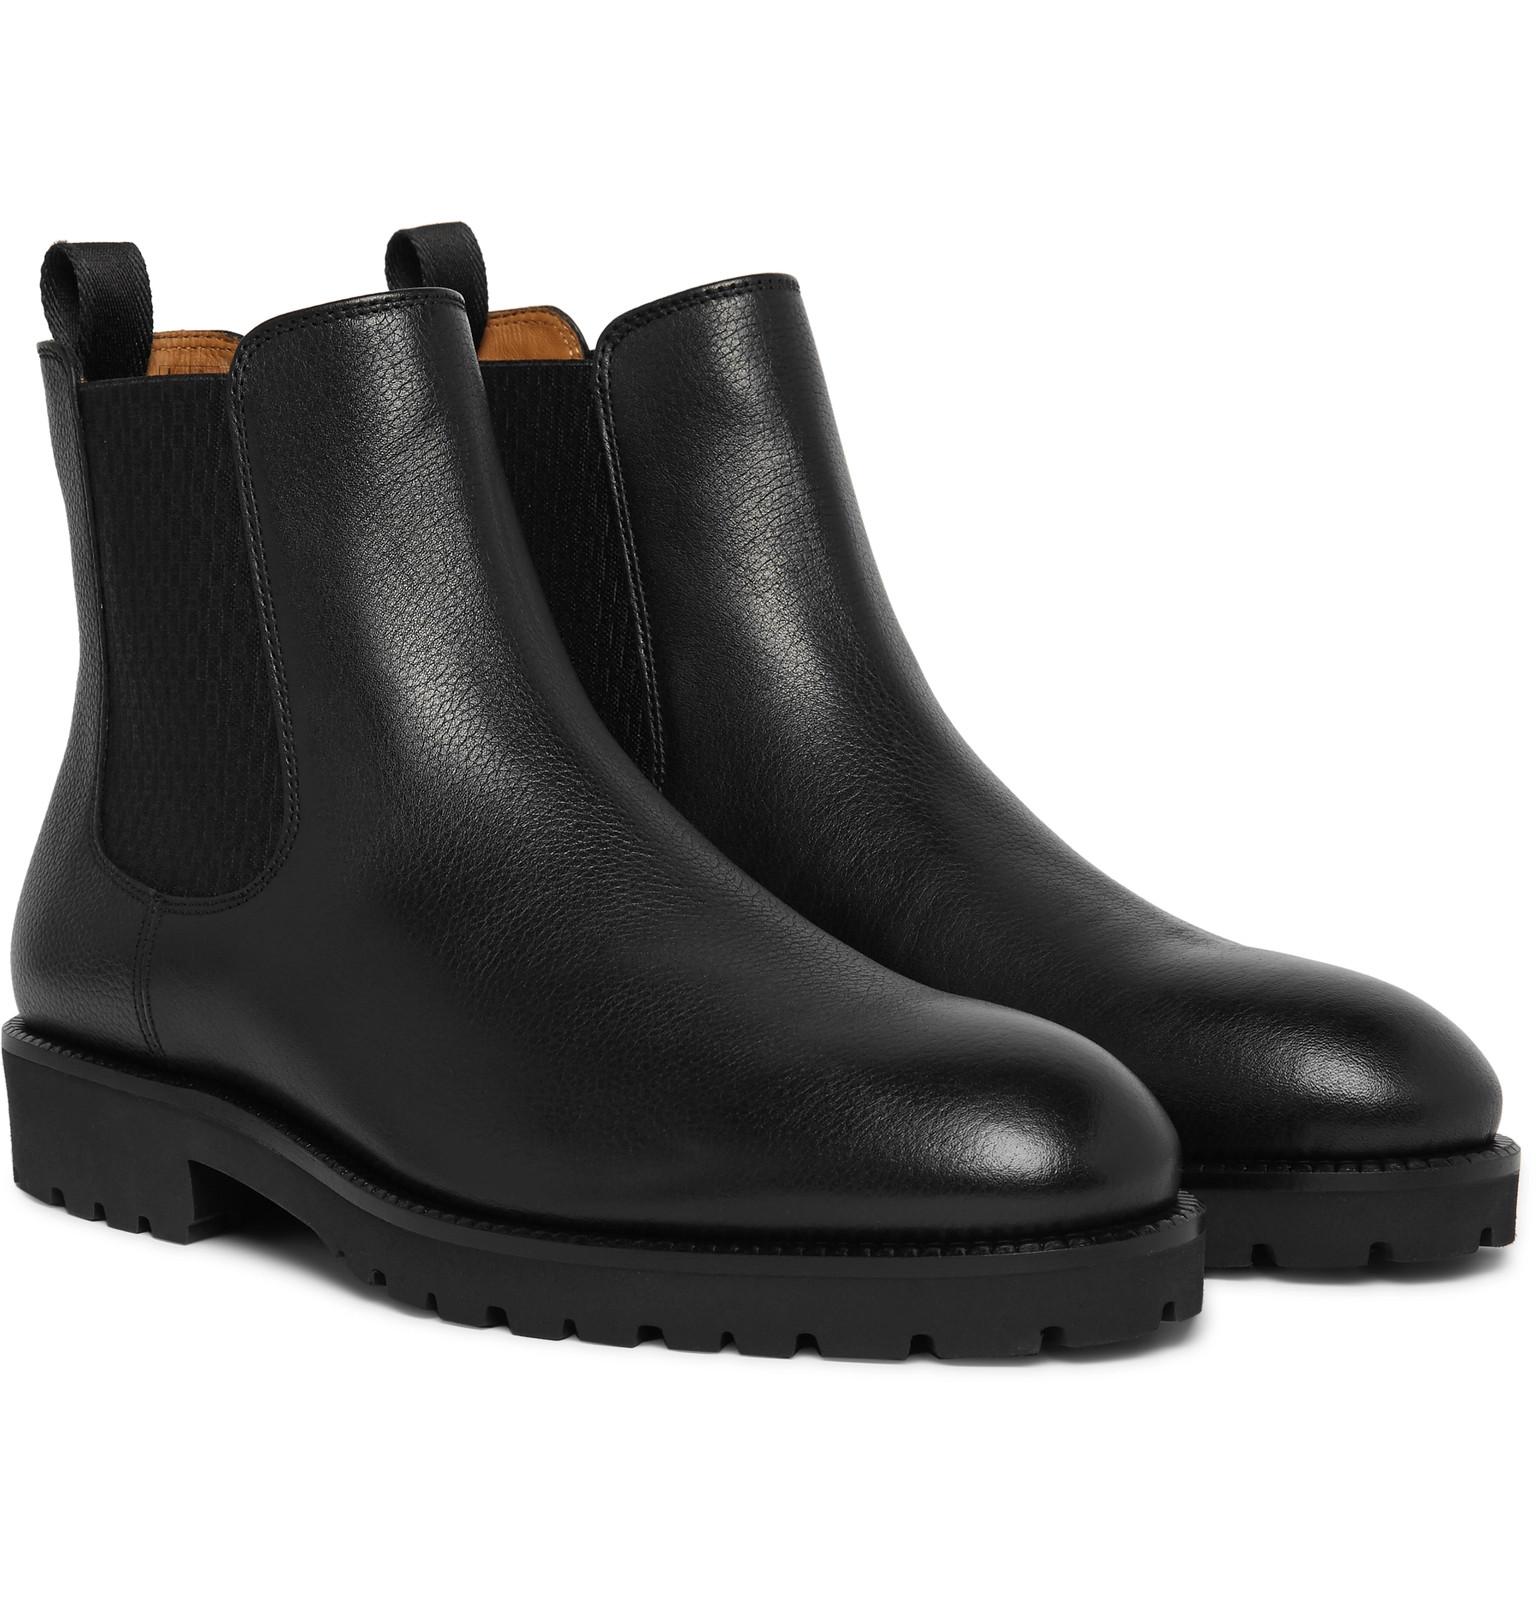 BOSS Eden Leather Chelsea Boots in Black for Men - Lyst